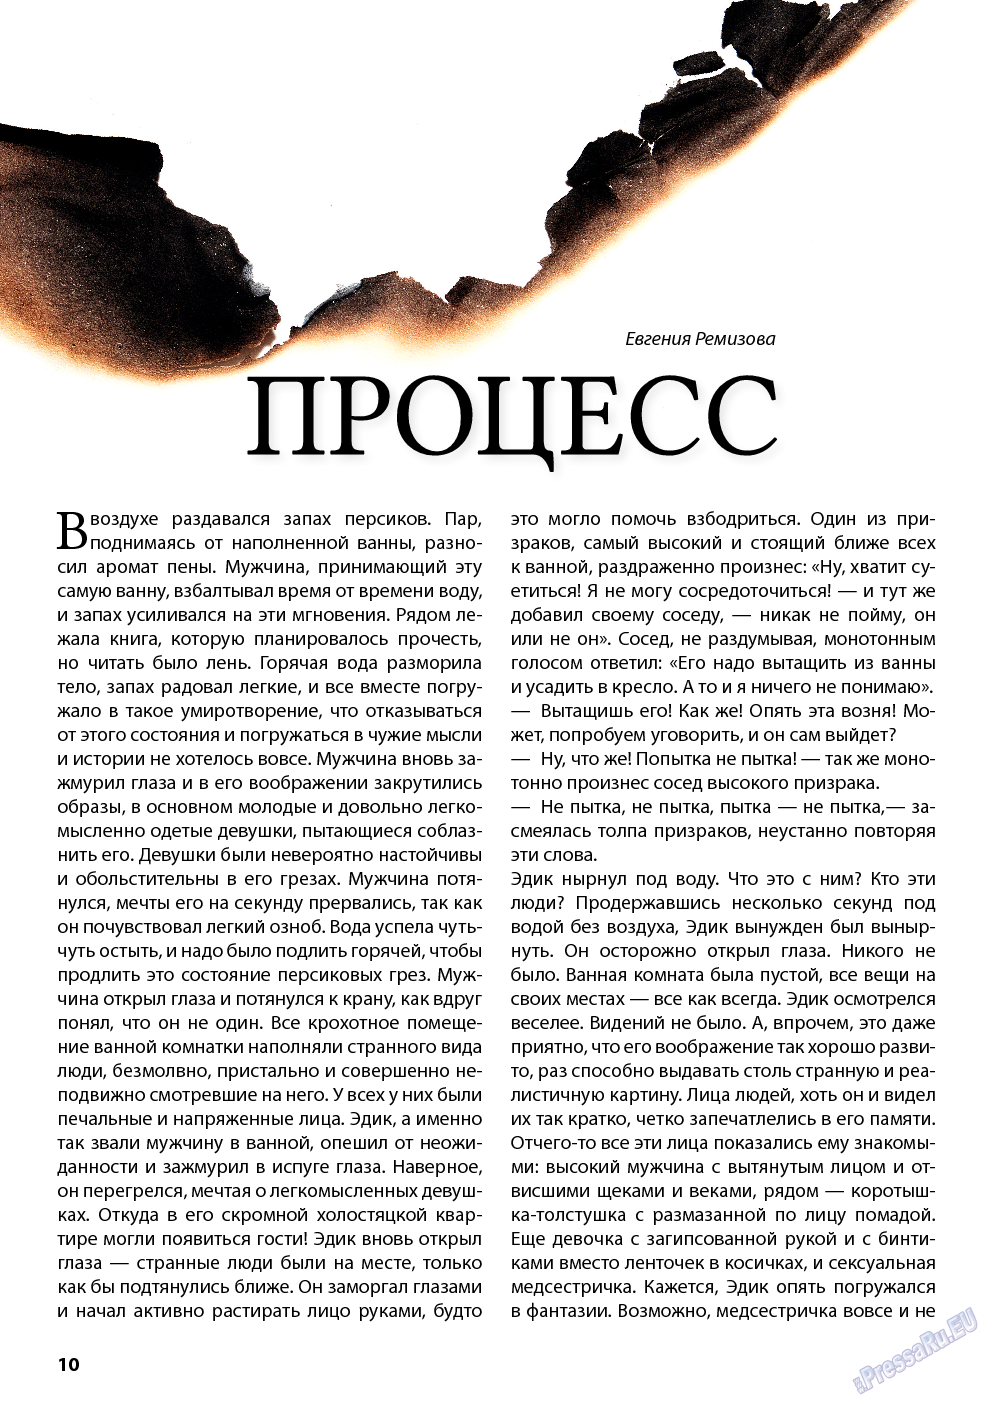 Wadim, журнал. 2013 №11 стр.10